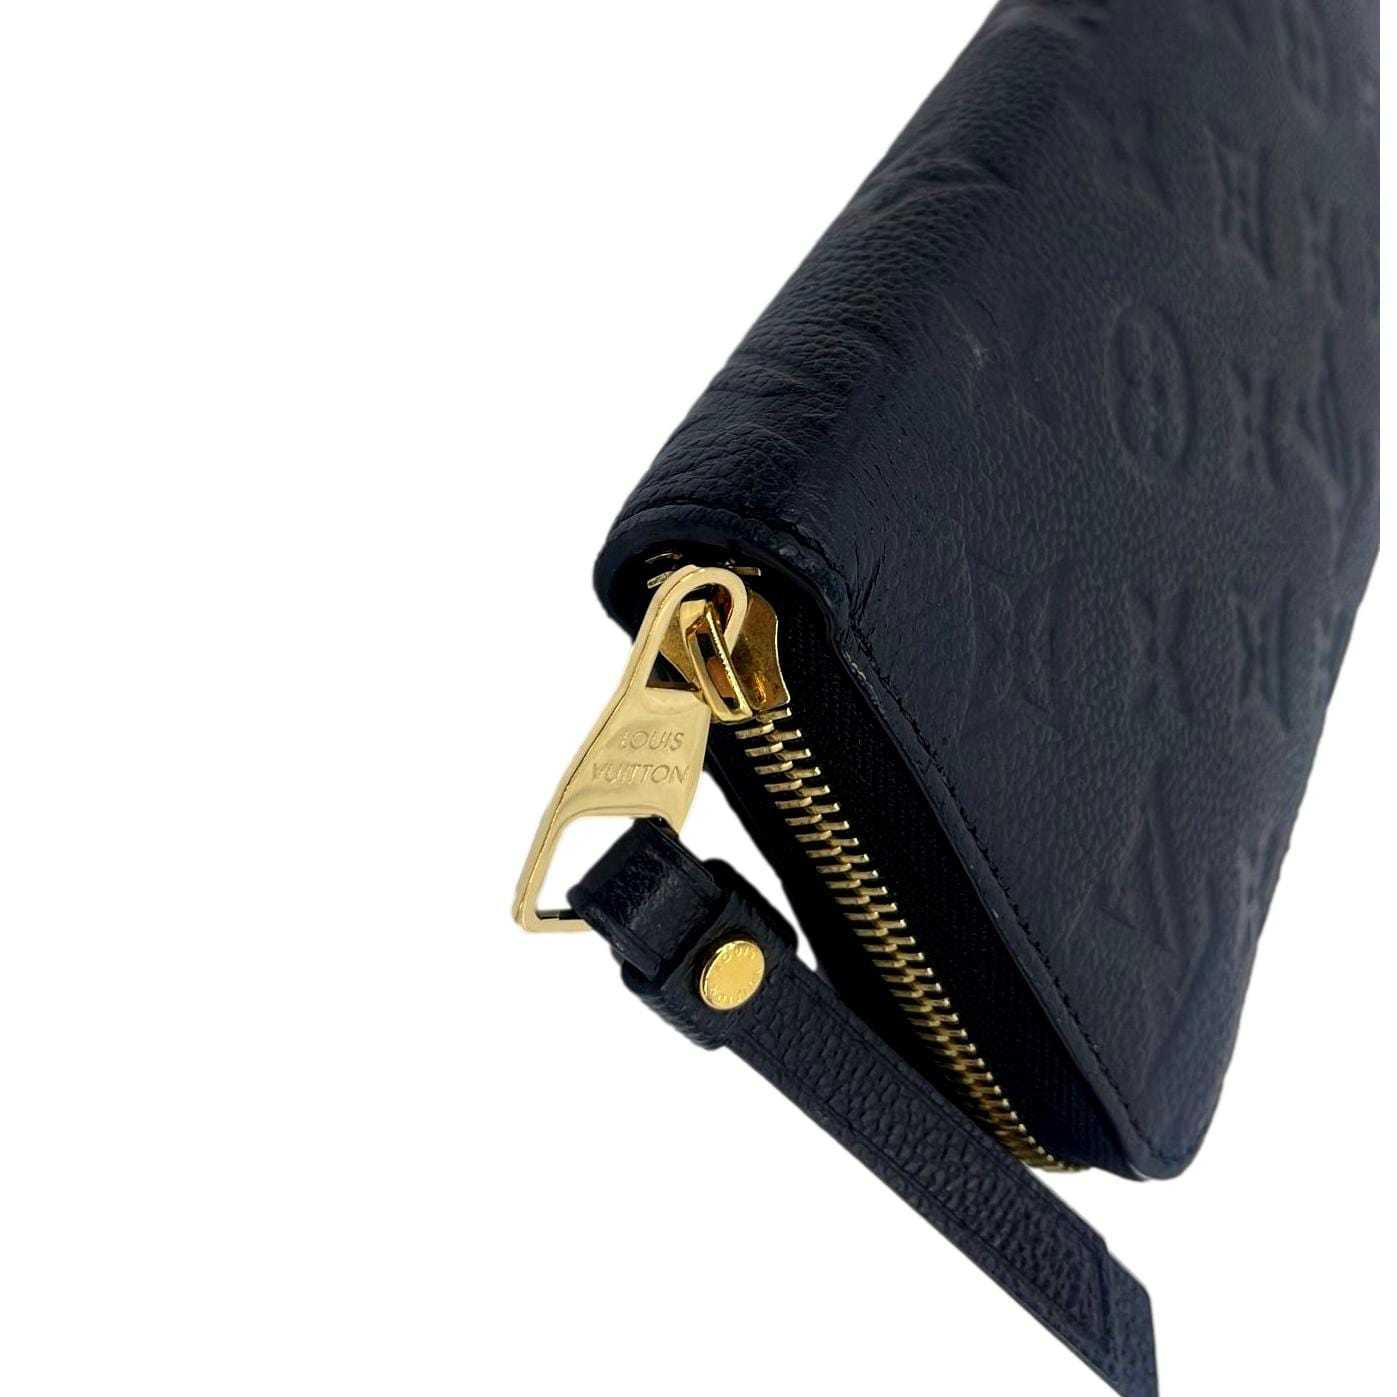 LOUIS VUITTON Monogram Empreinte Leather Zippy Wallet Black